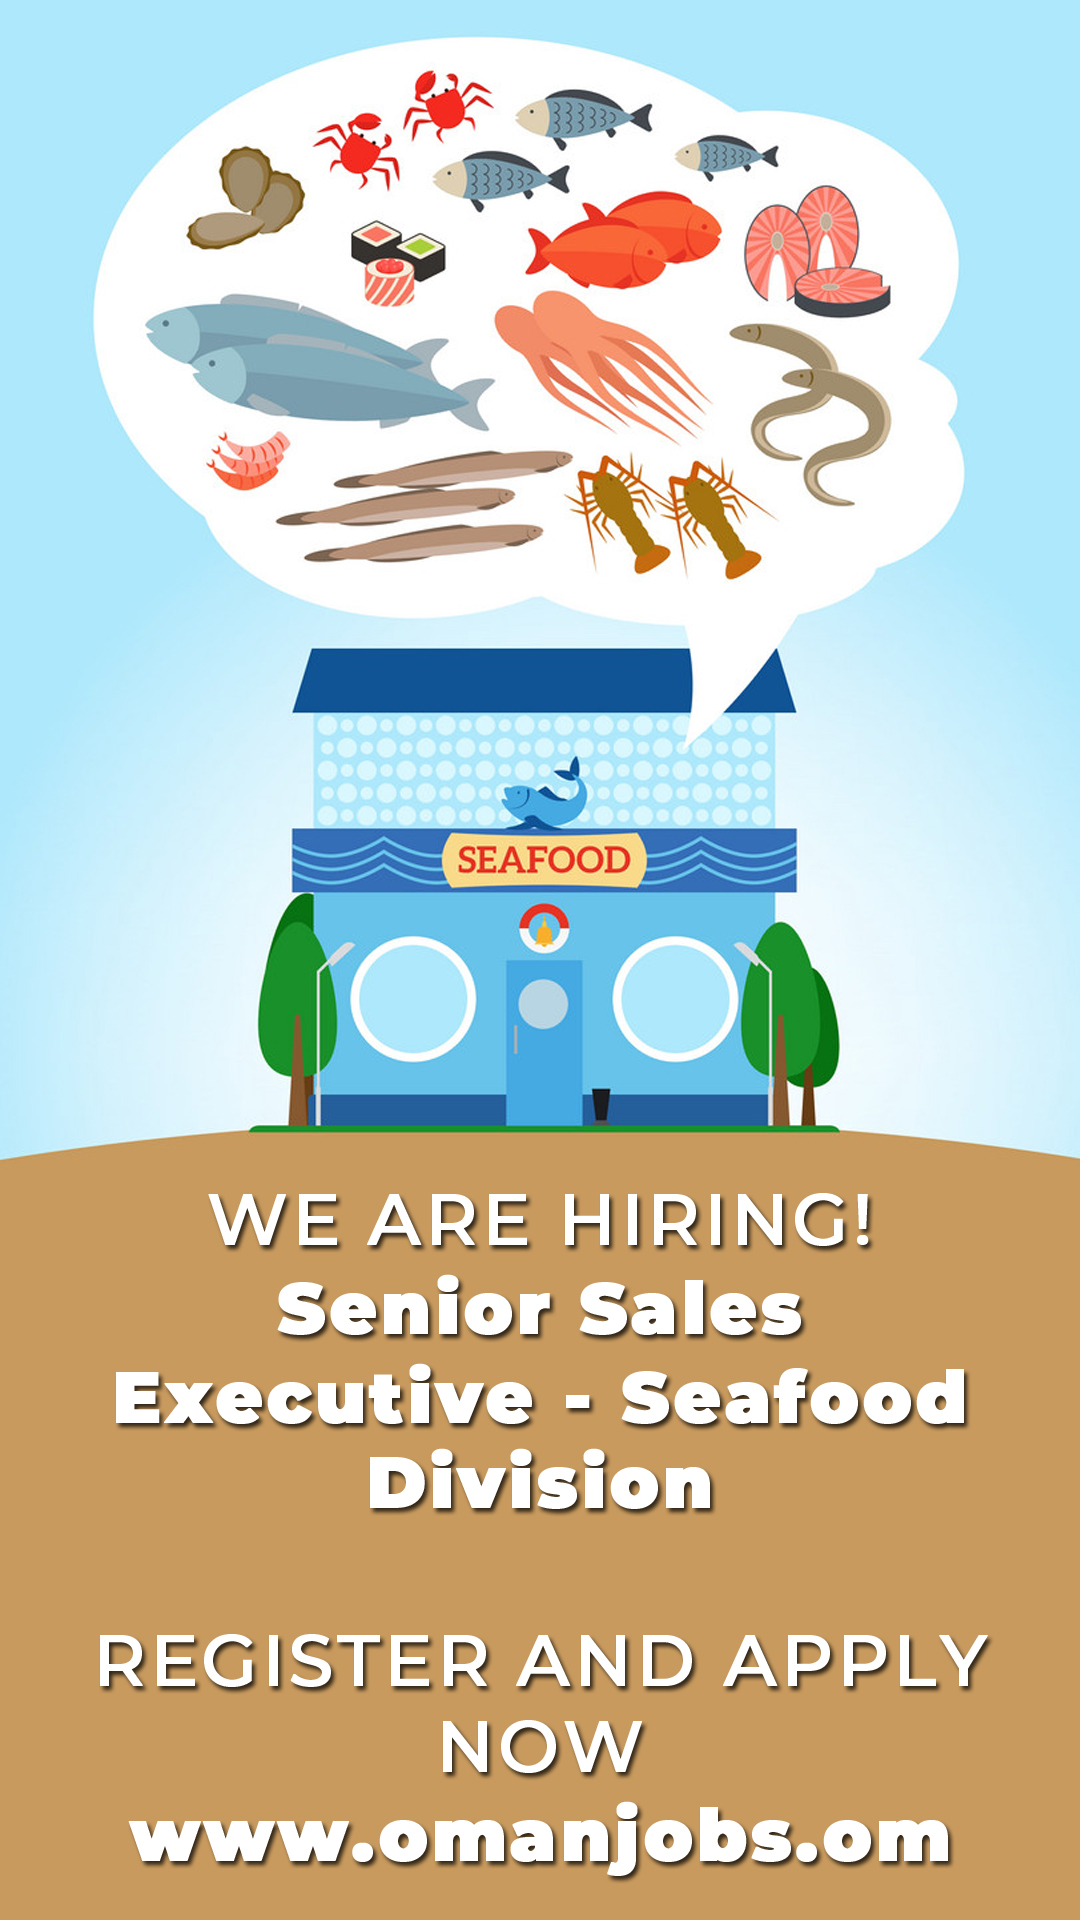 WE ARE HIRING! Senior Sales Executive - Seafood Division